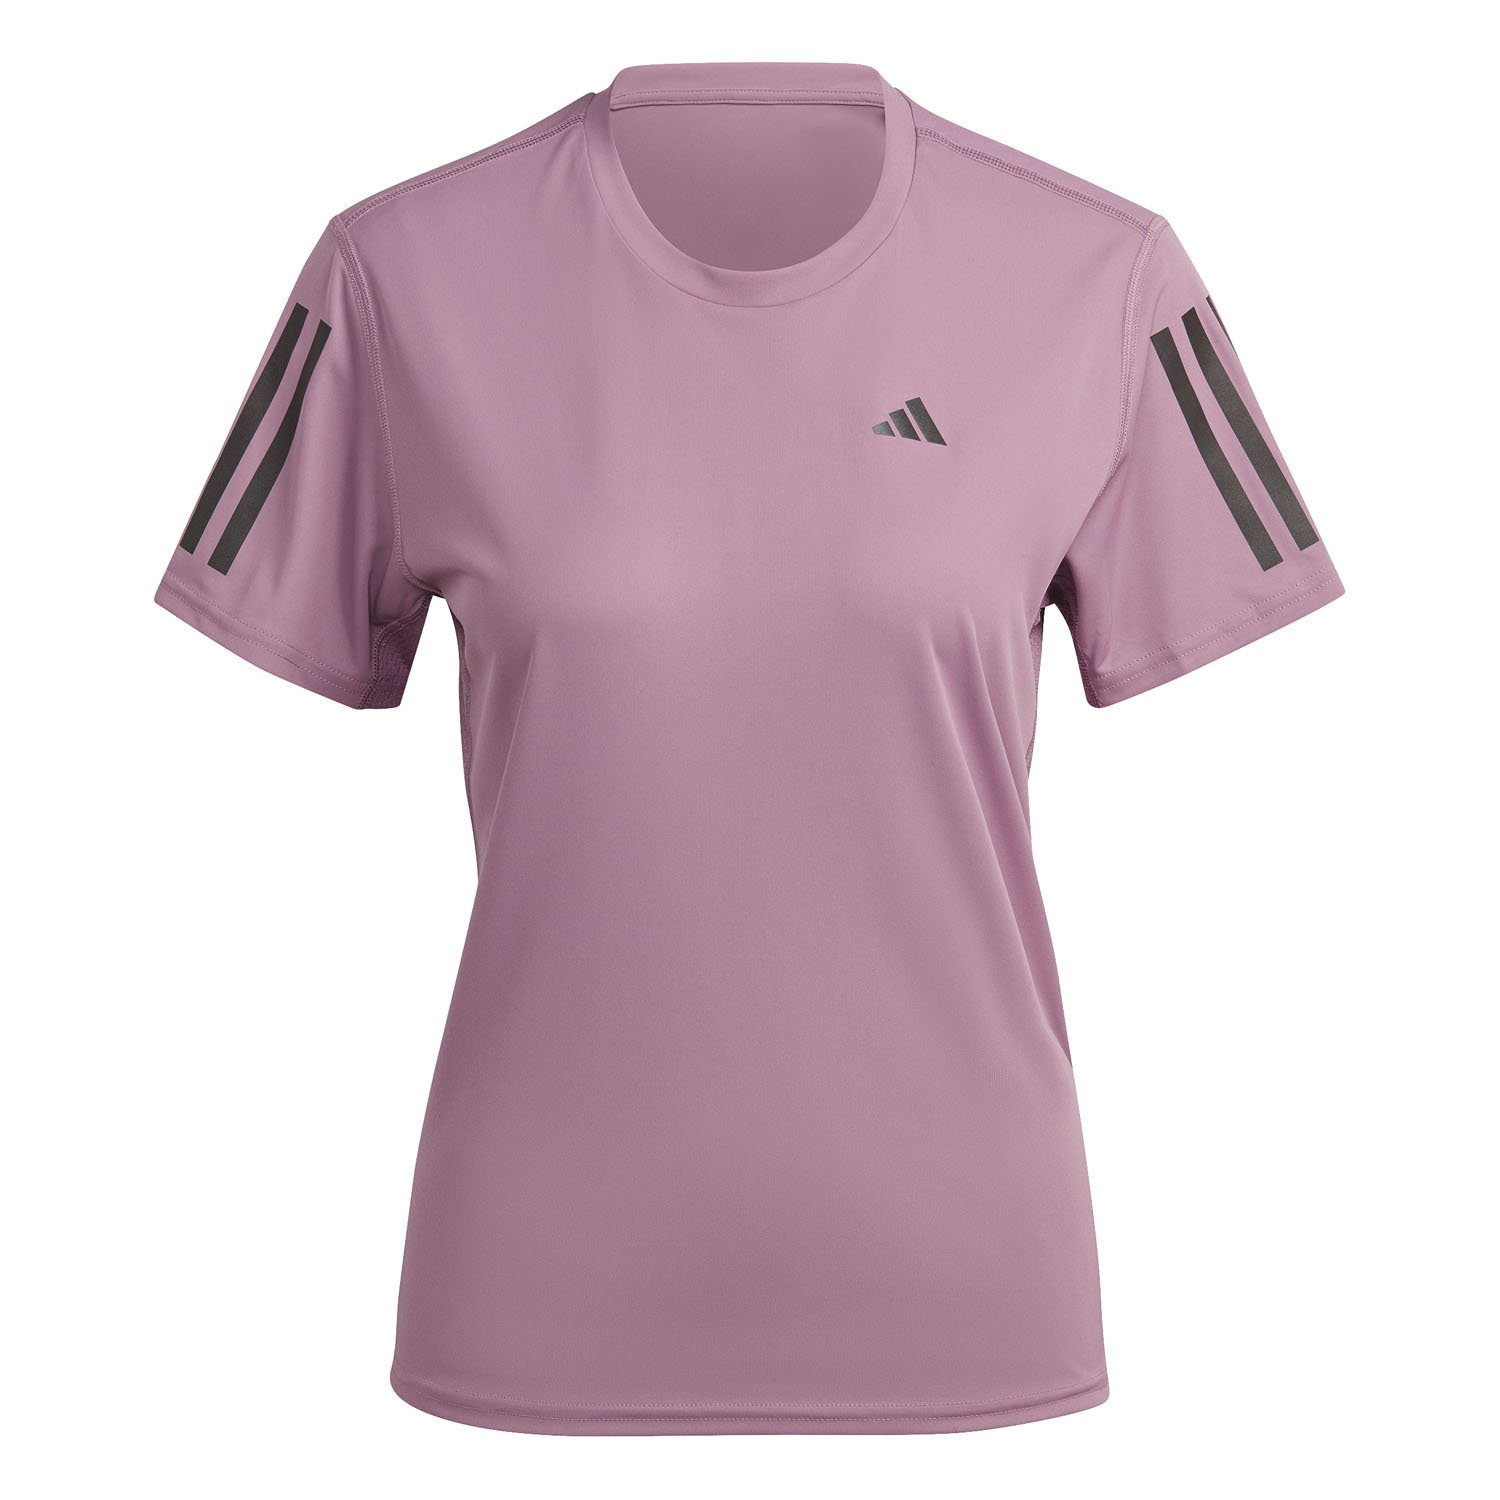 Adidas Own The Run Kadın Koşu Tişörtü - Pembe - 1